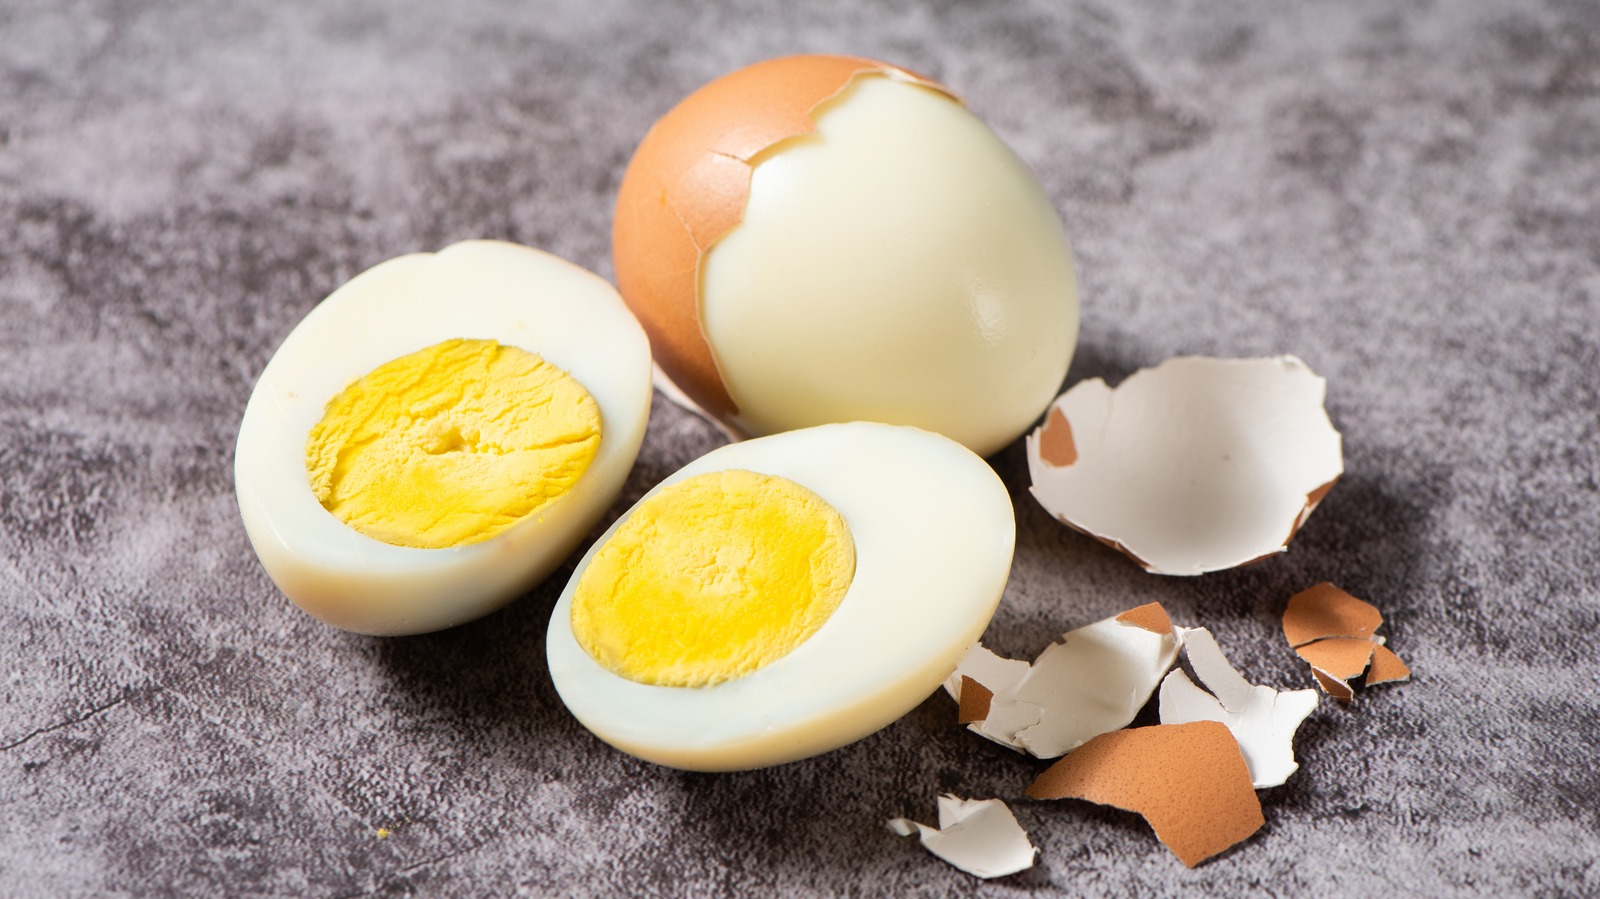 https://www.mashed.com/img/gallery/a-lemon-wedge-can-make-peeling-hard-boiled-eggs-so-much-easier/l-intro-1691547982.jpg